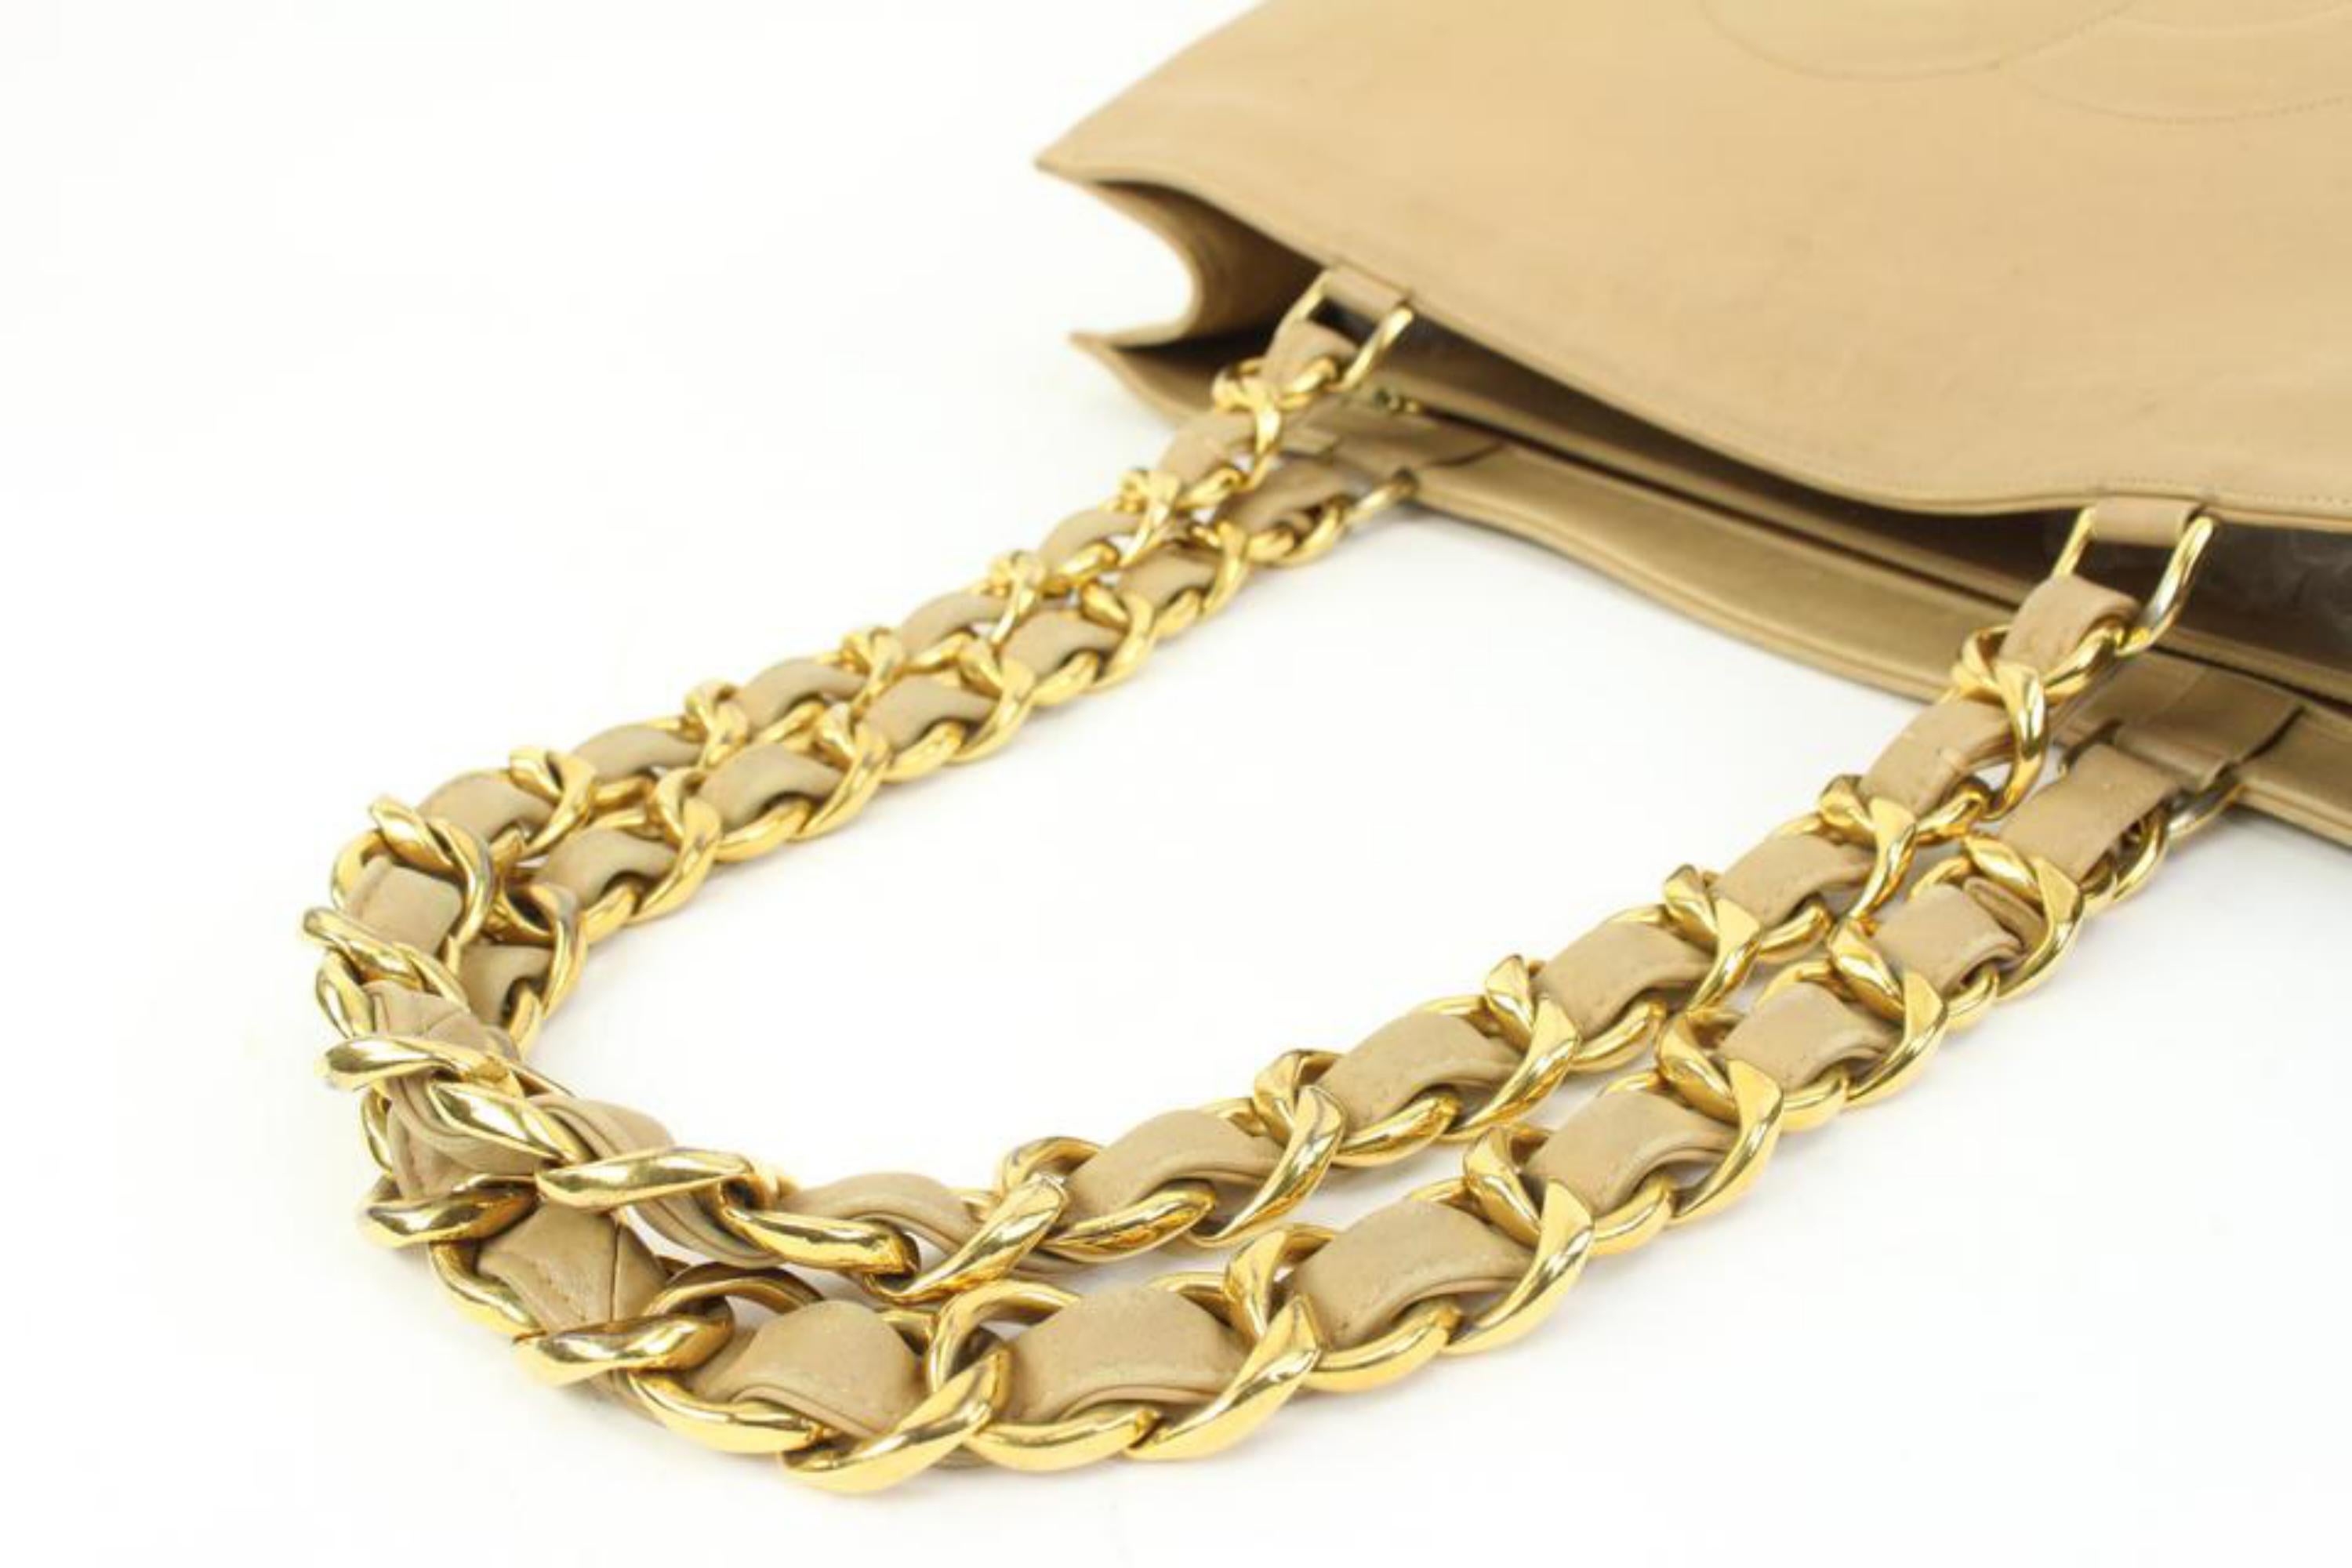 Chanel Jumbo Gold Chain Beige Lambskin Shopper Tote 58ck315s For Sale 3